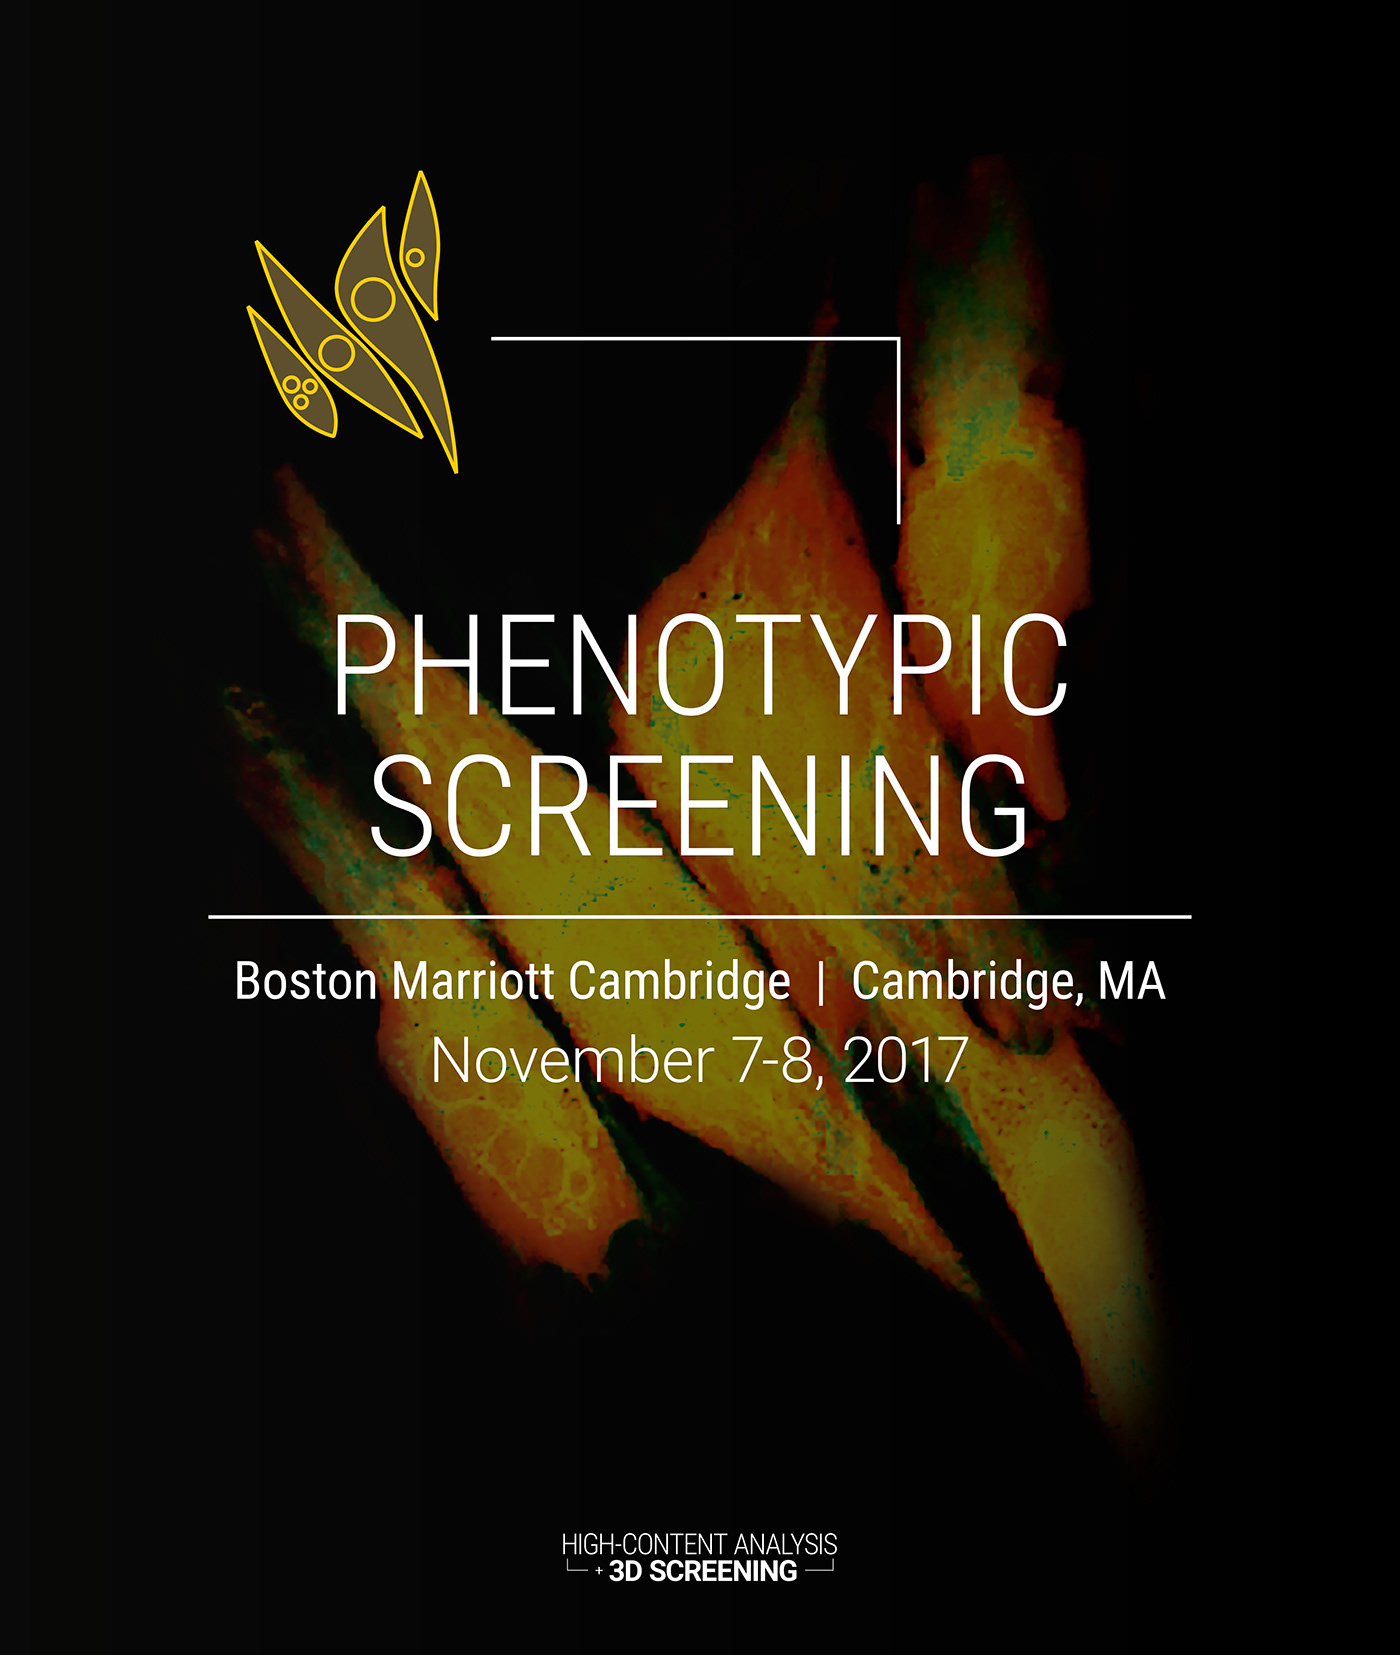 Adobe Portfolio science research healthcare miscroscope cellular neon contrast Event conference